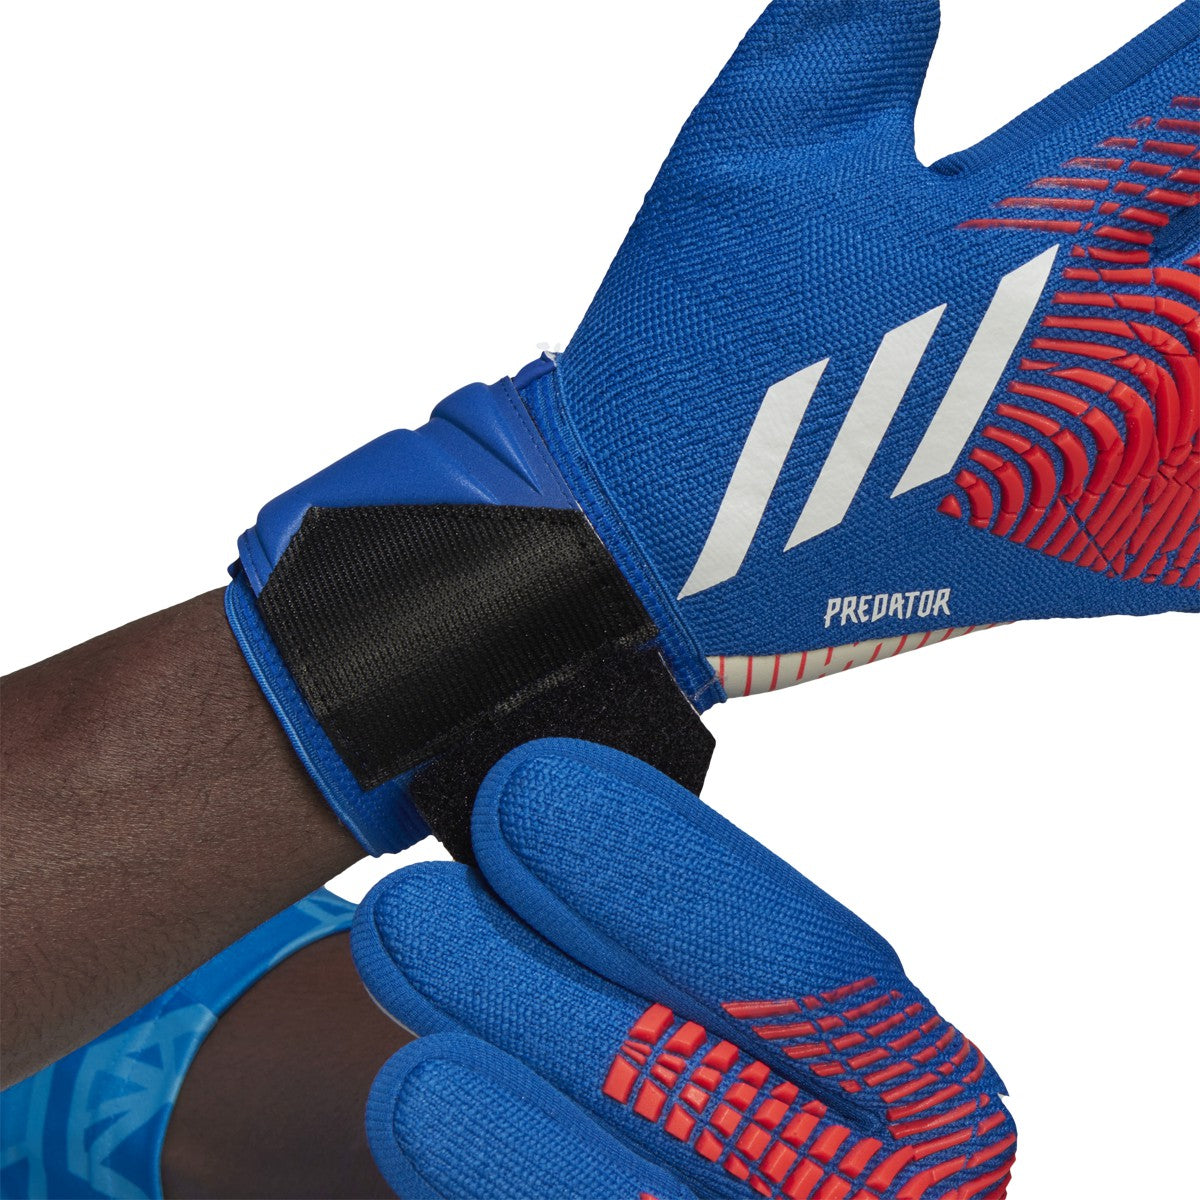 Predator 20 Pro Goalkeeper Glove